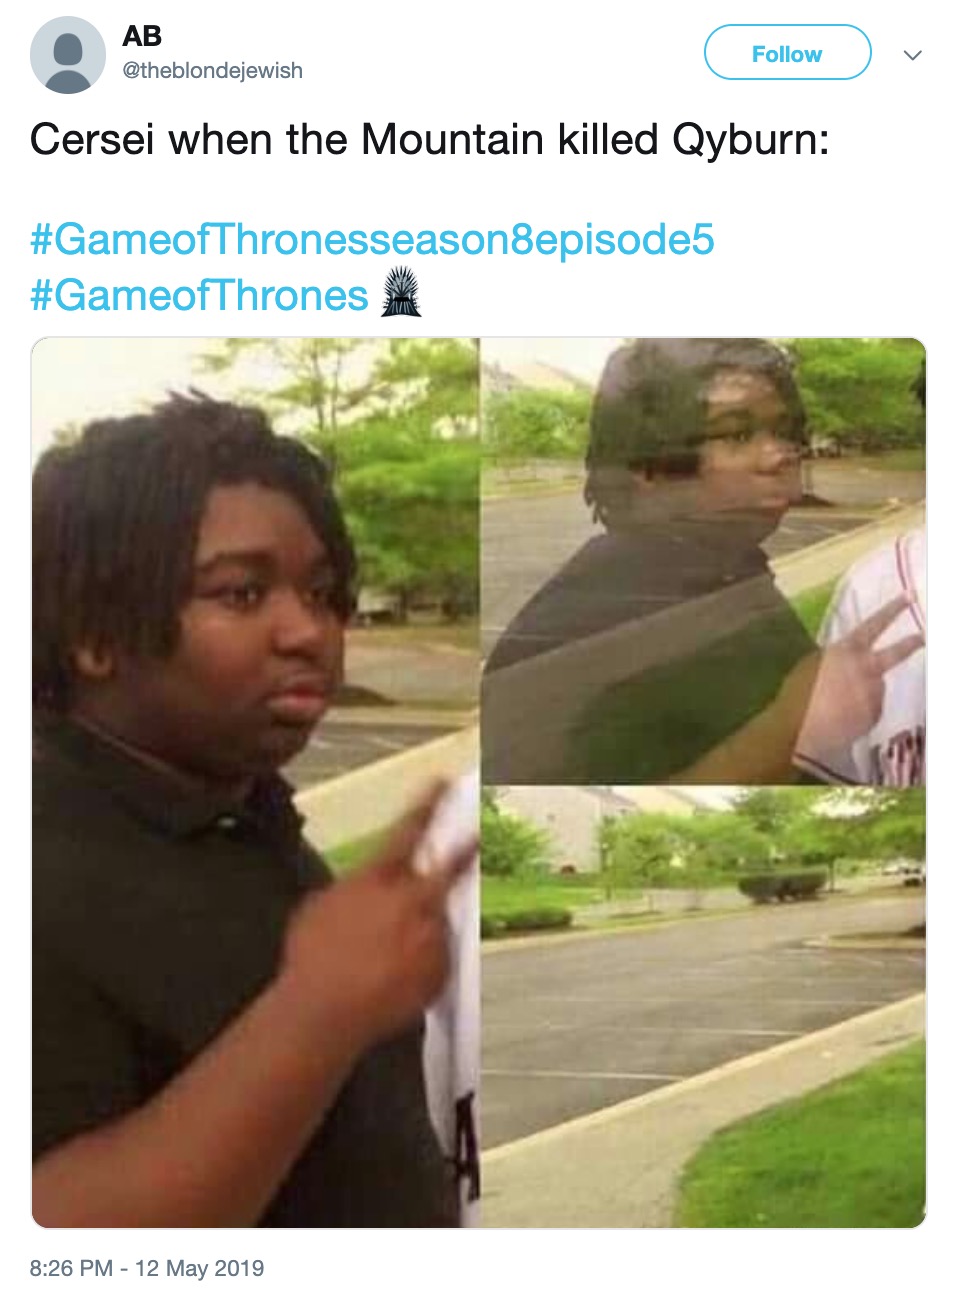 Game of Thrones Season 8 Episode 5 memes - dad heater meme - Ab v Cersei when the Mountain killed Qyburn